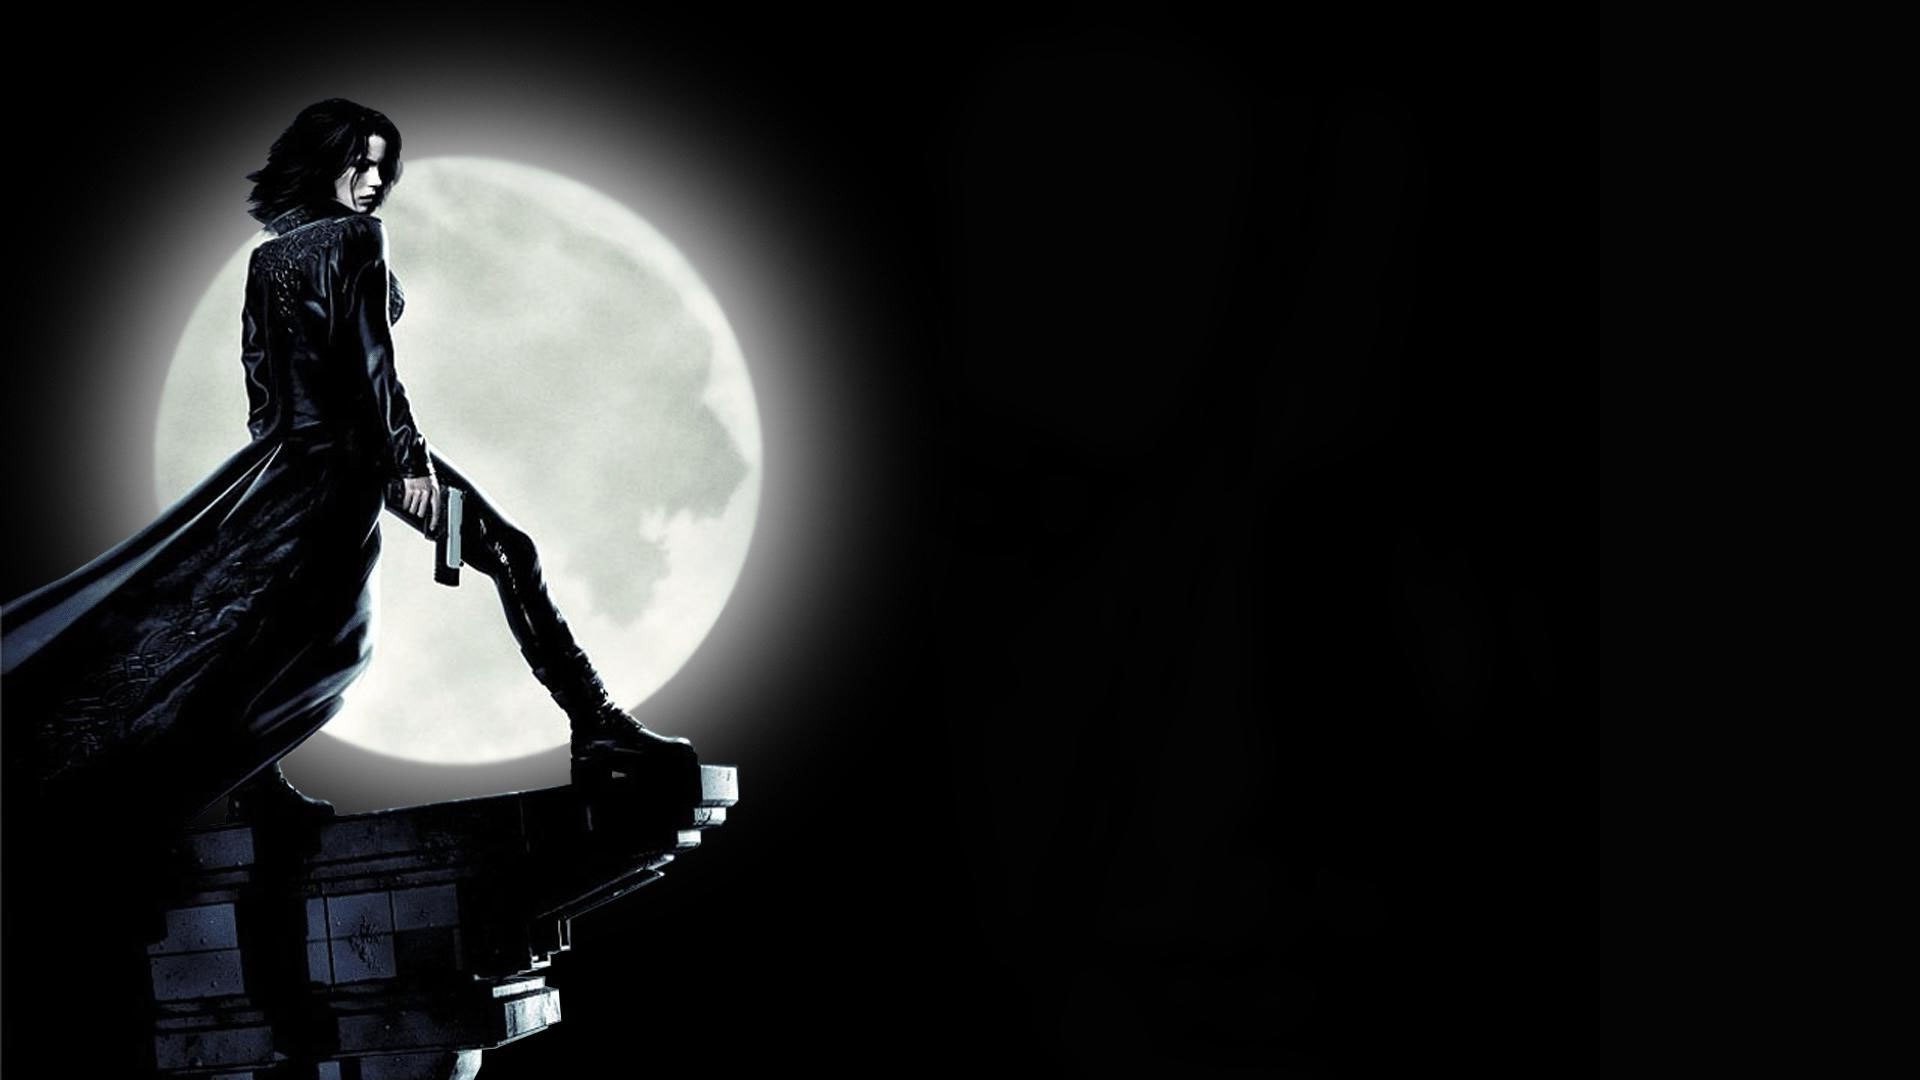 Wallpaper, silhouette, movies, Kate Beckinsale, Underworld, light, darkness, screenshot, 1920x1080 px, computer wallpaper, black and white, monochrome photography, film noir 1920x1080